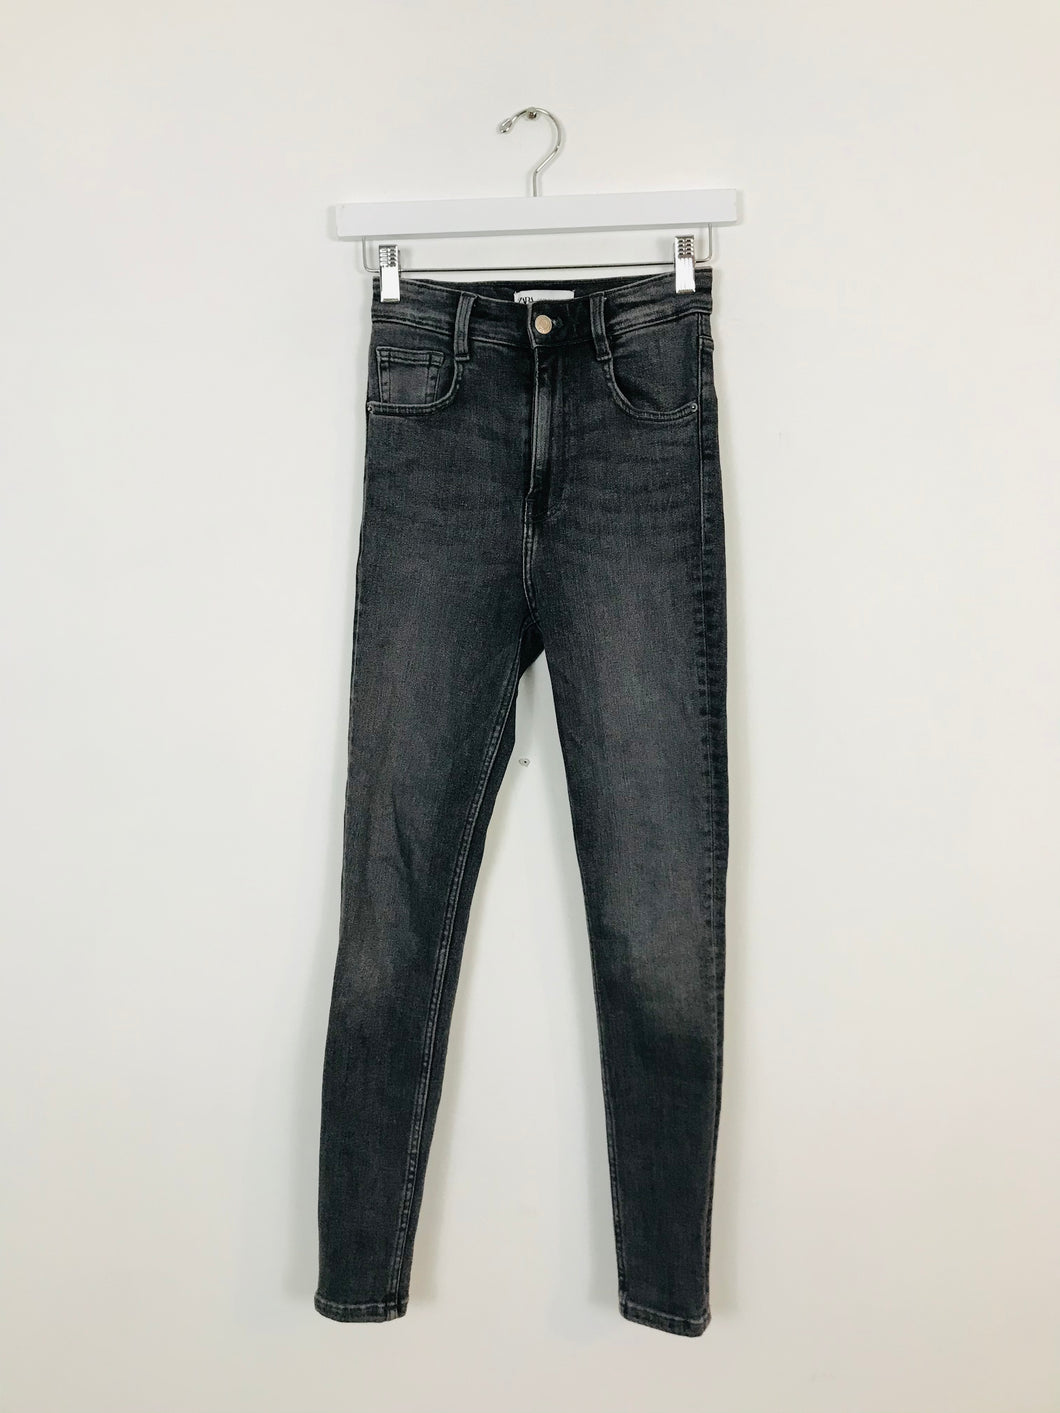 Zara Women’s High Waisted Skinny Jeans | EU34 UK6 | Grey